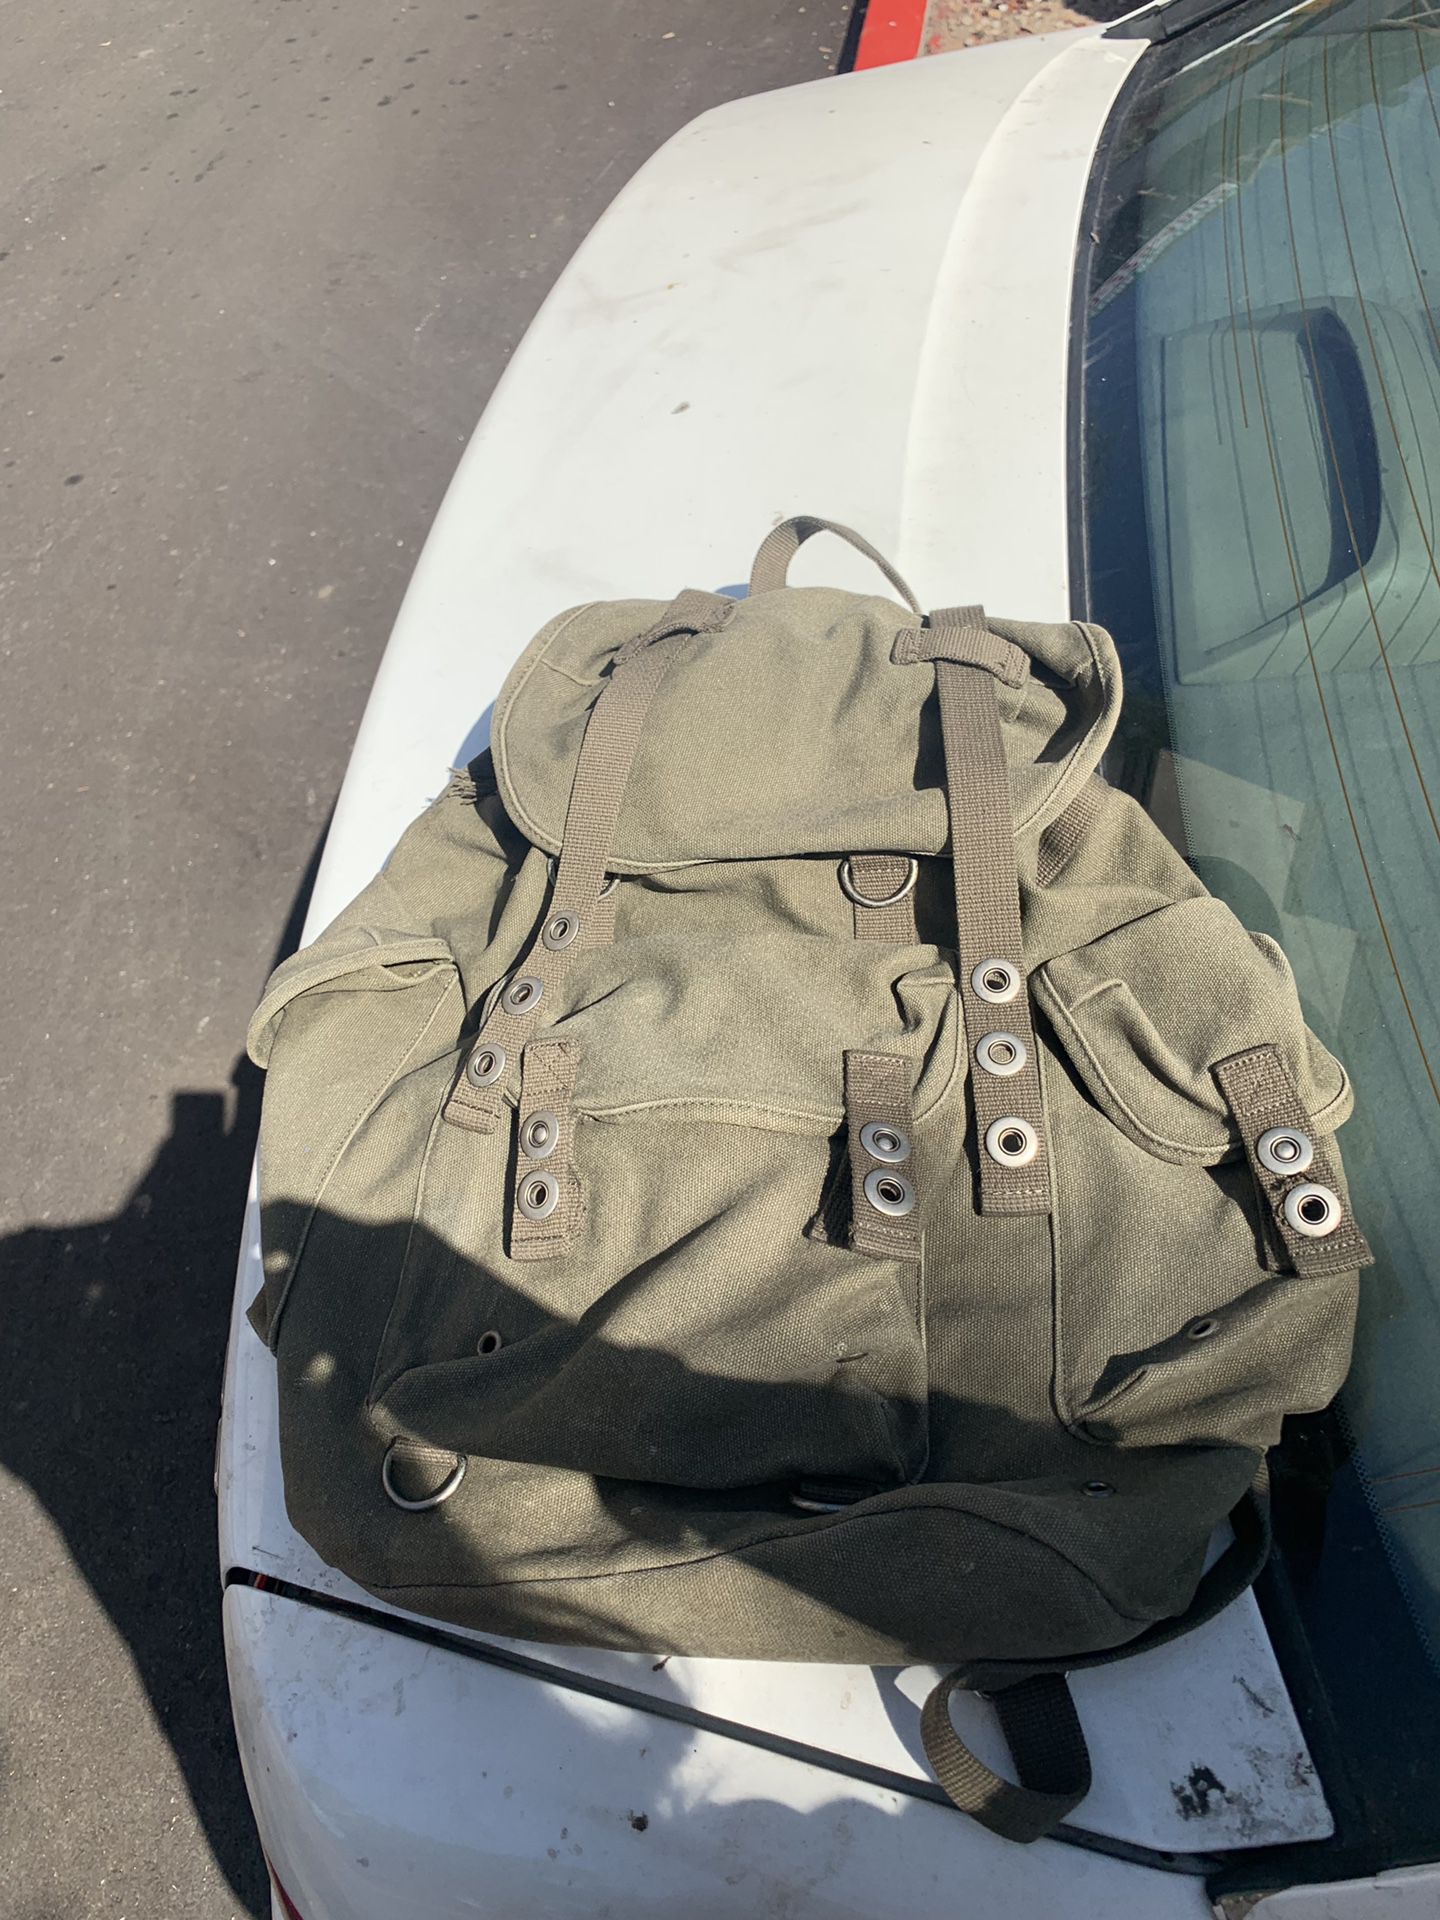 ARMY Backpack. $20 OBO